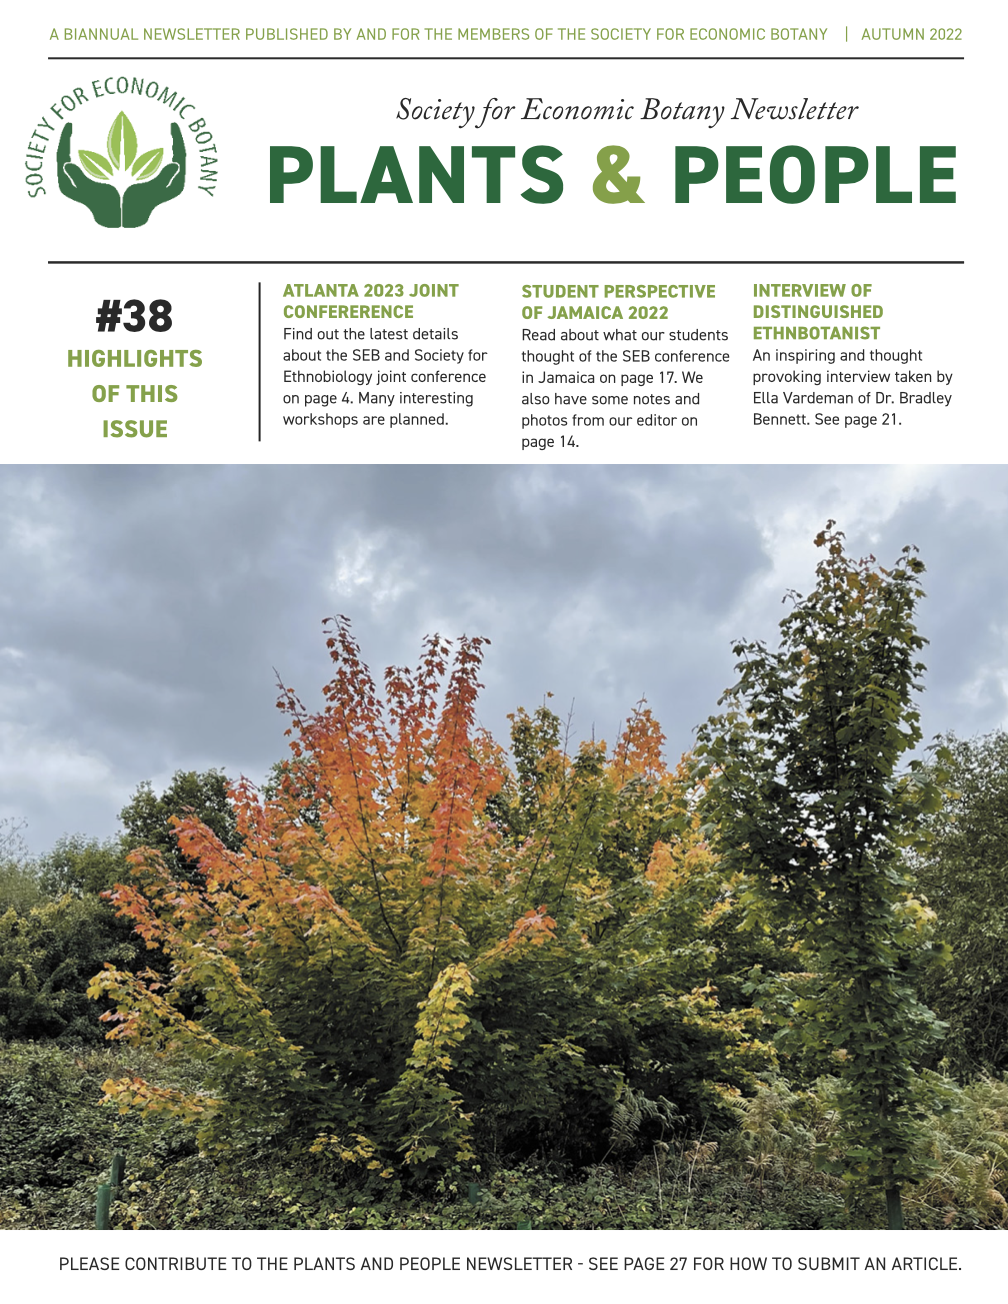 Plants & People 2022 Autumn Issue